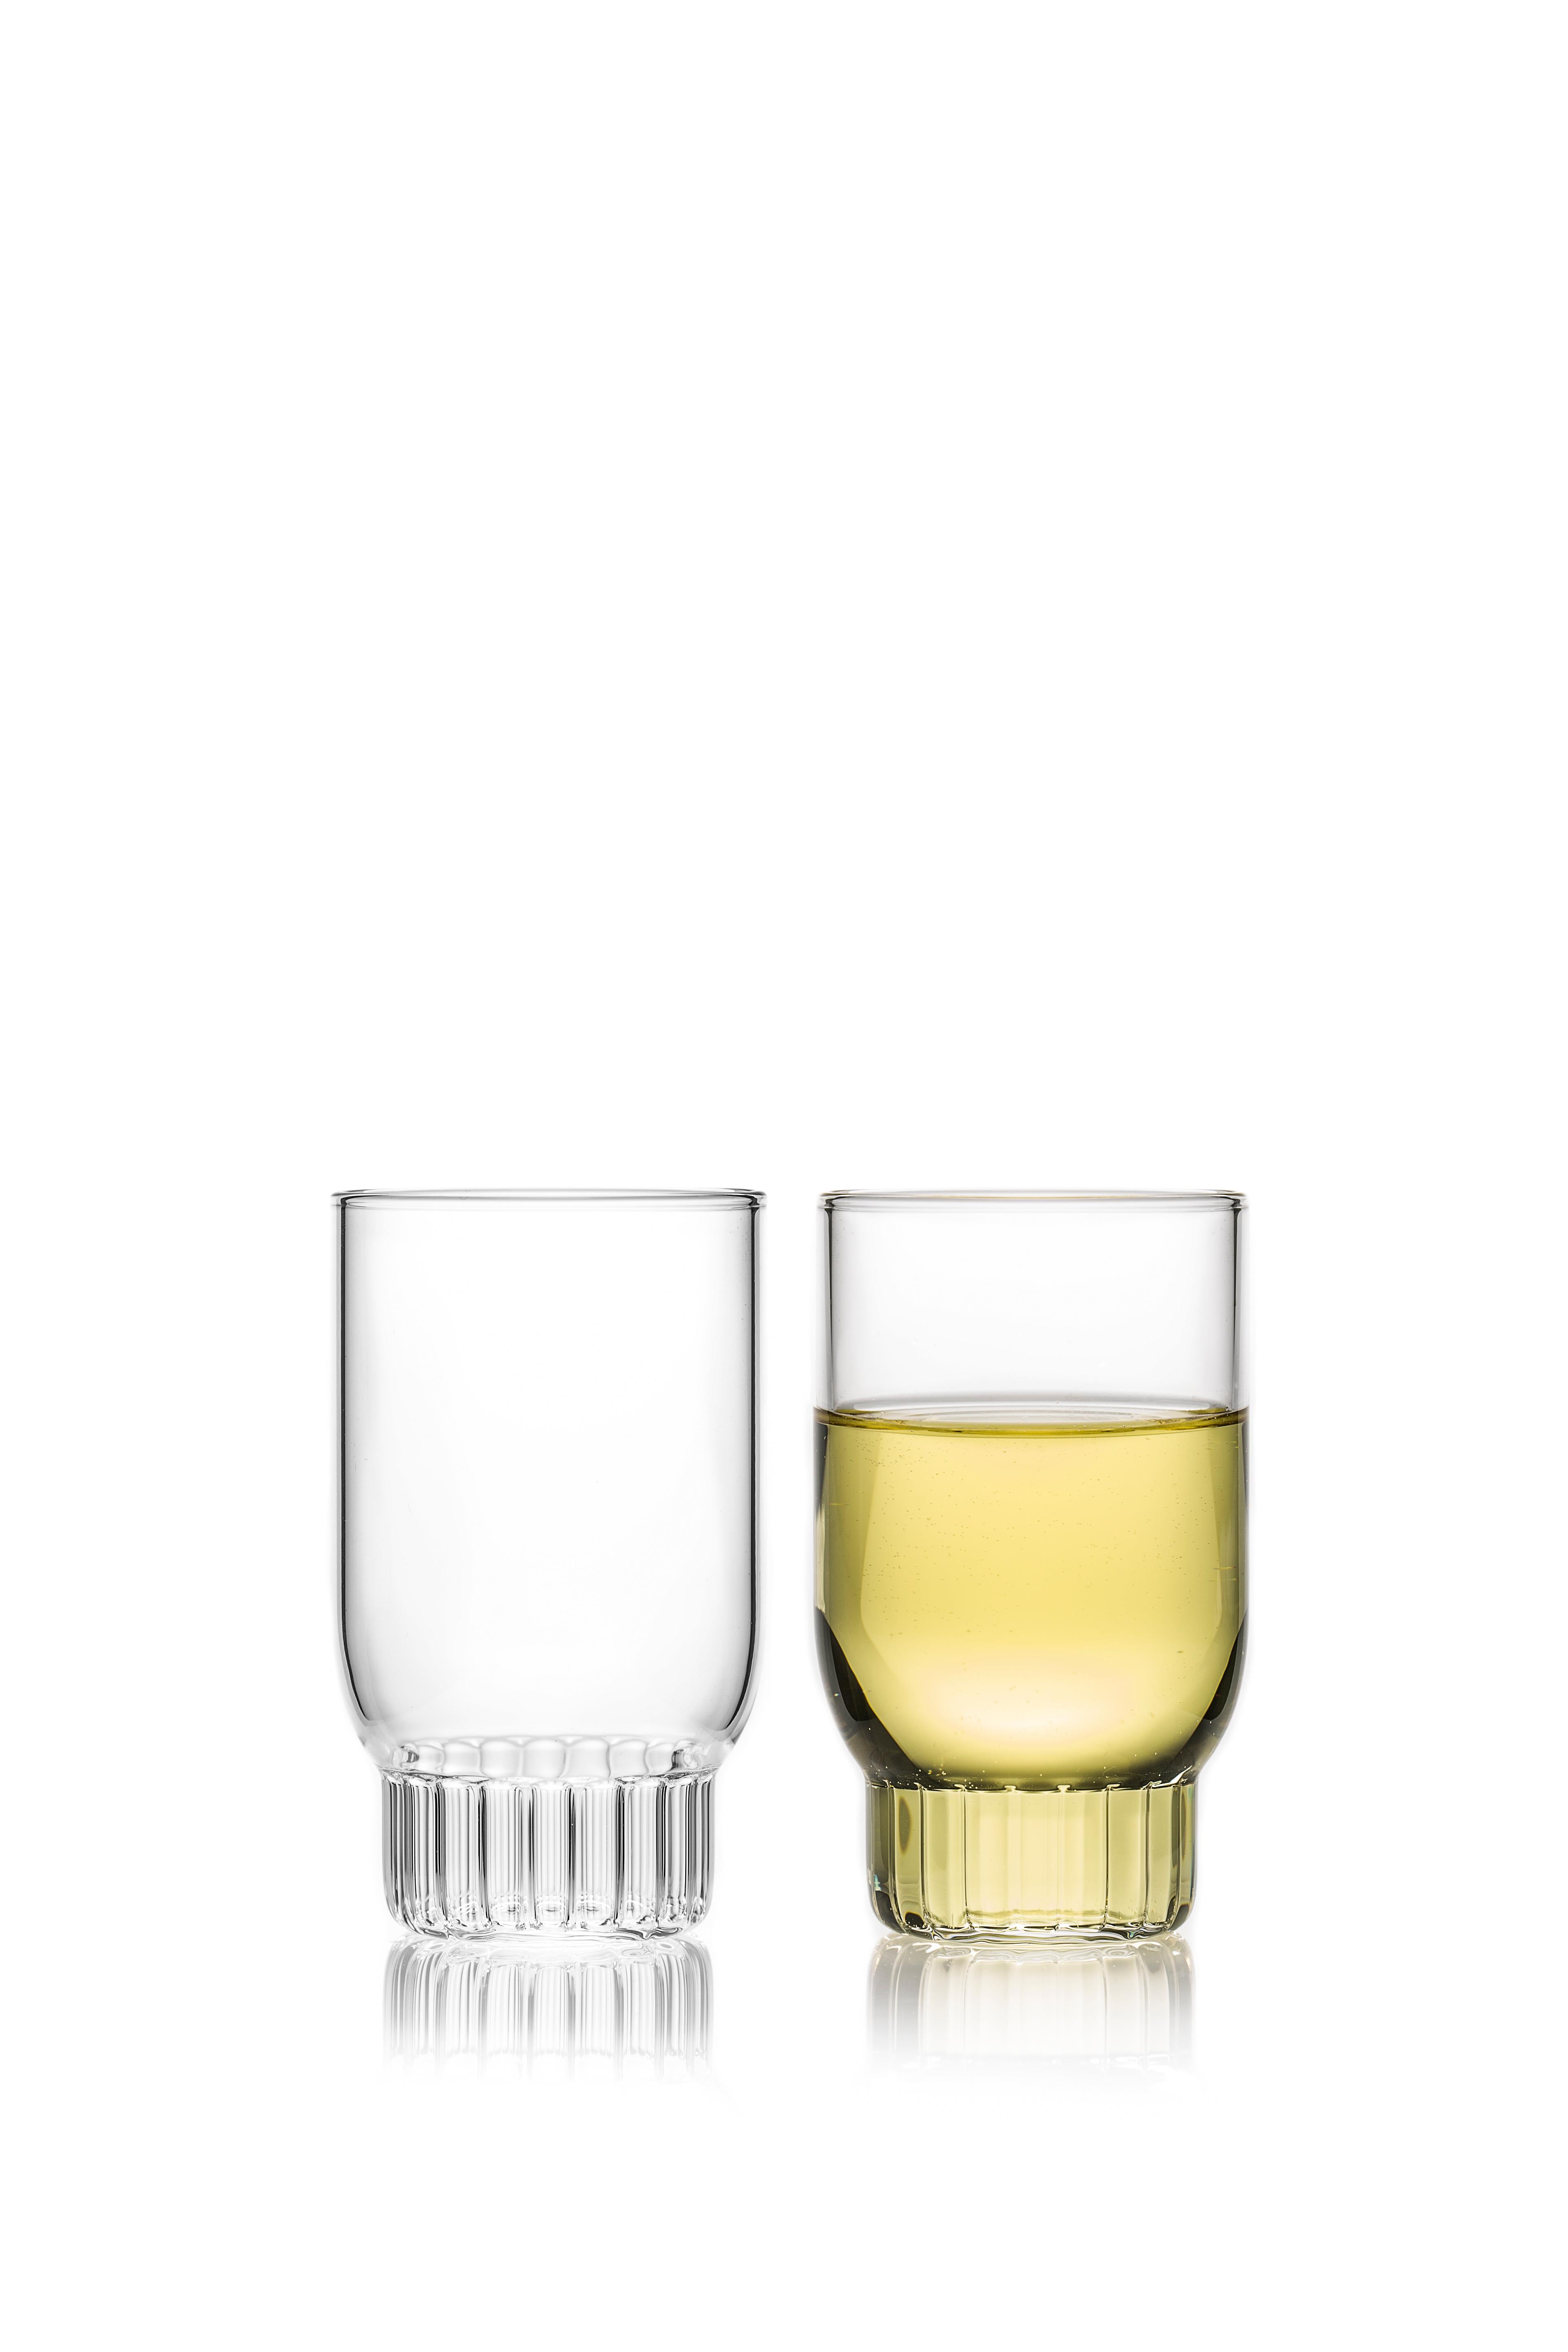 Modern fferrone Contemporary Czech Glass Rasori Carafe with Six Small Rasori Glasses For Sale